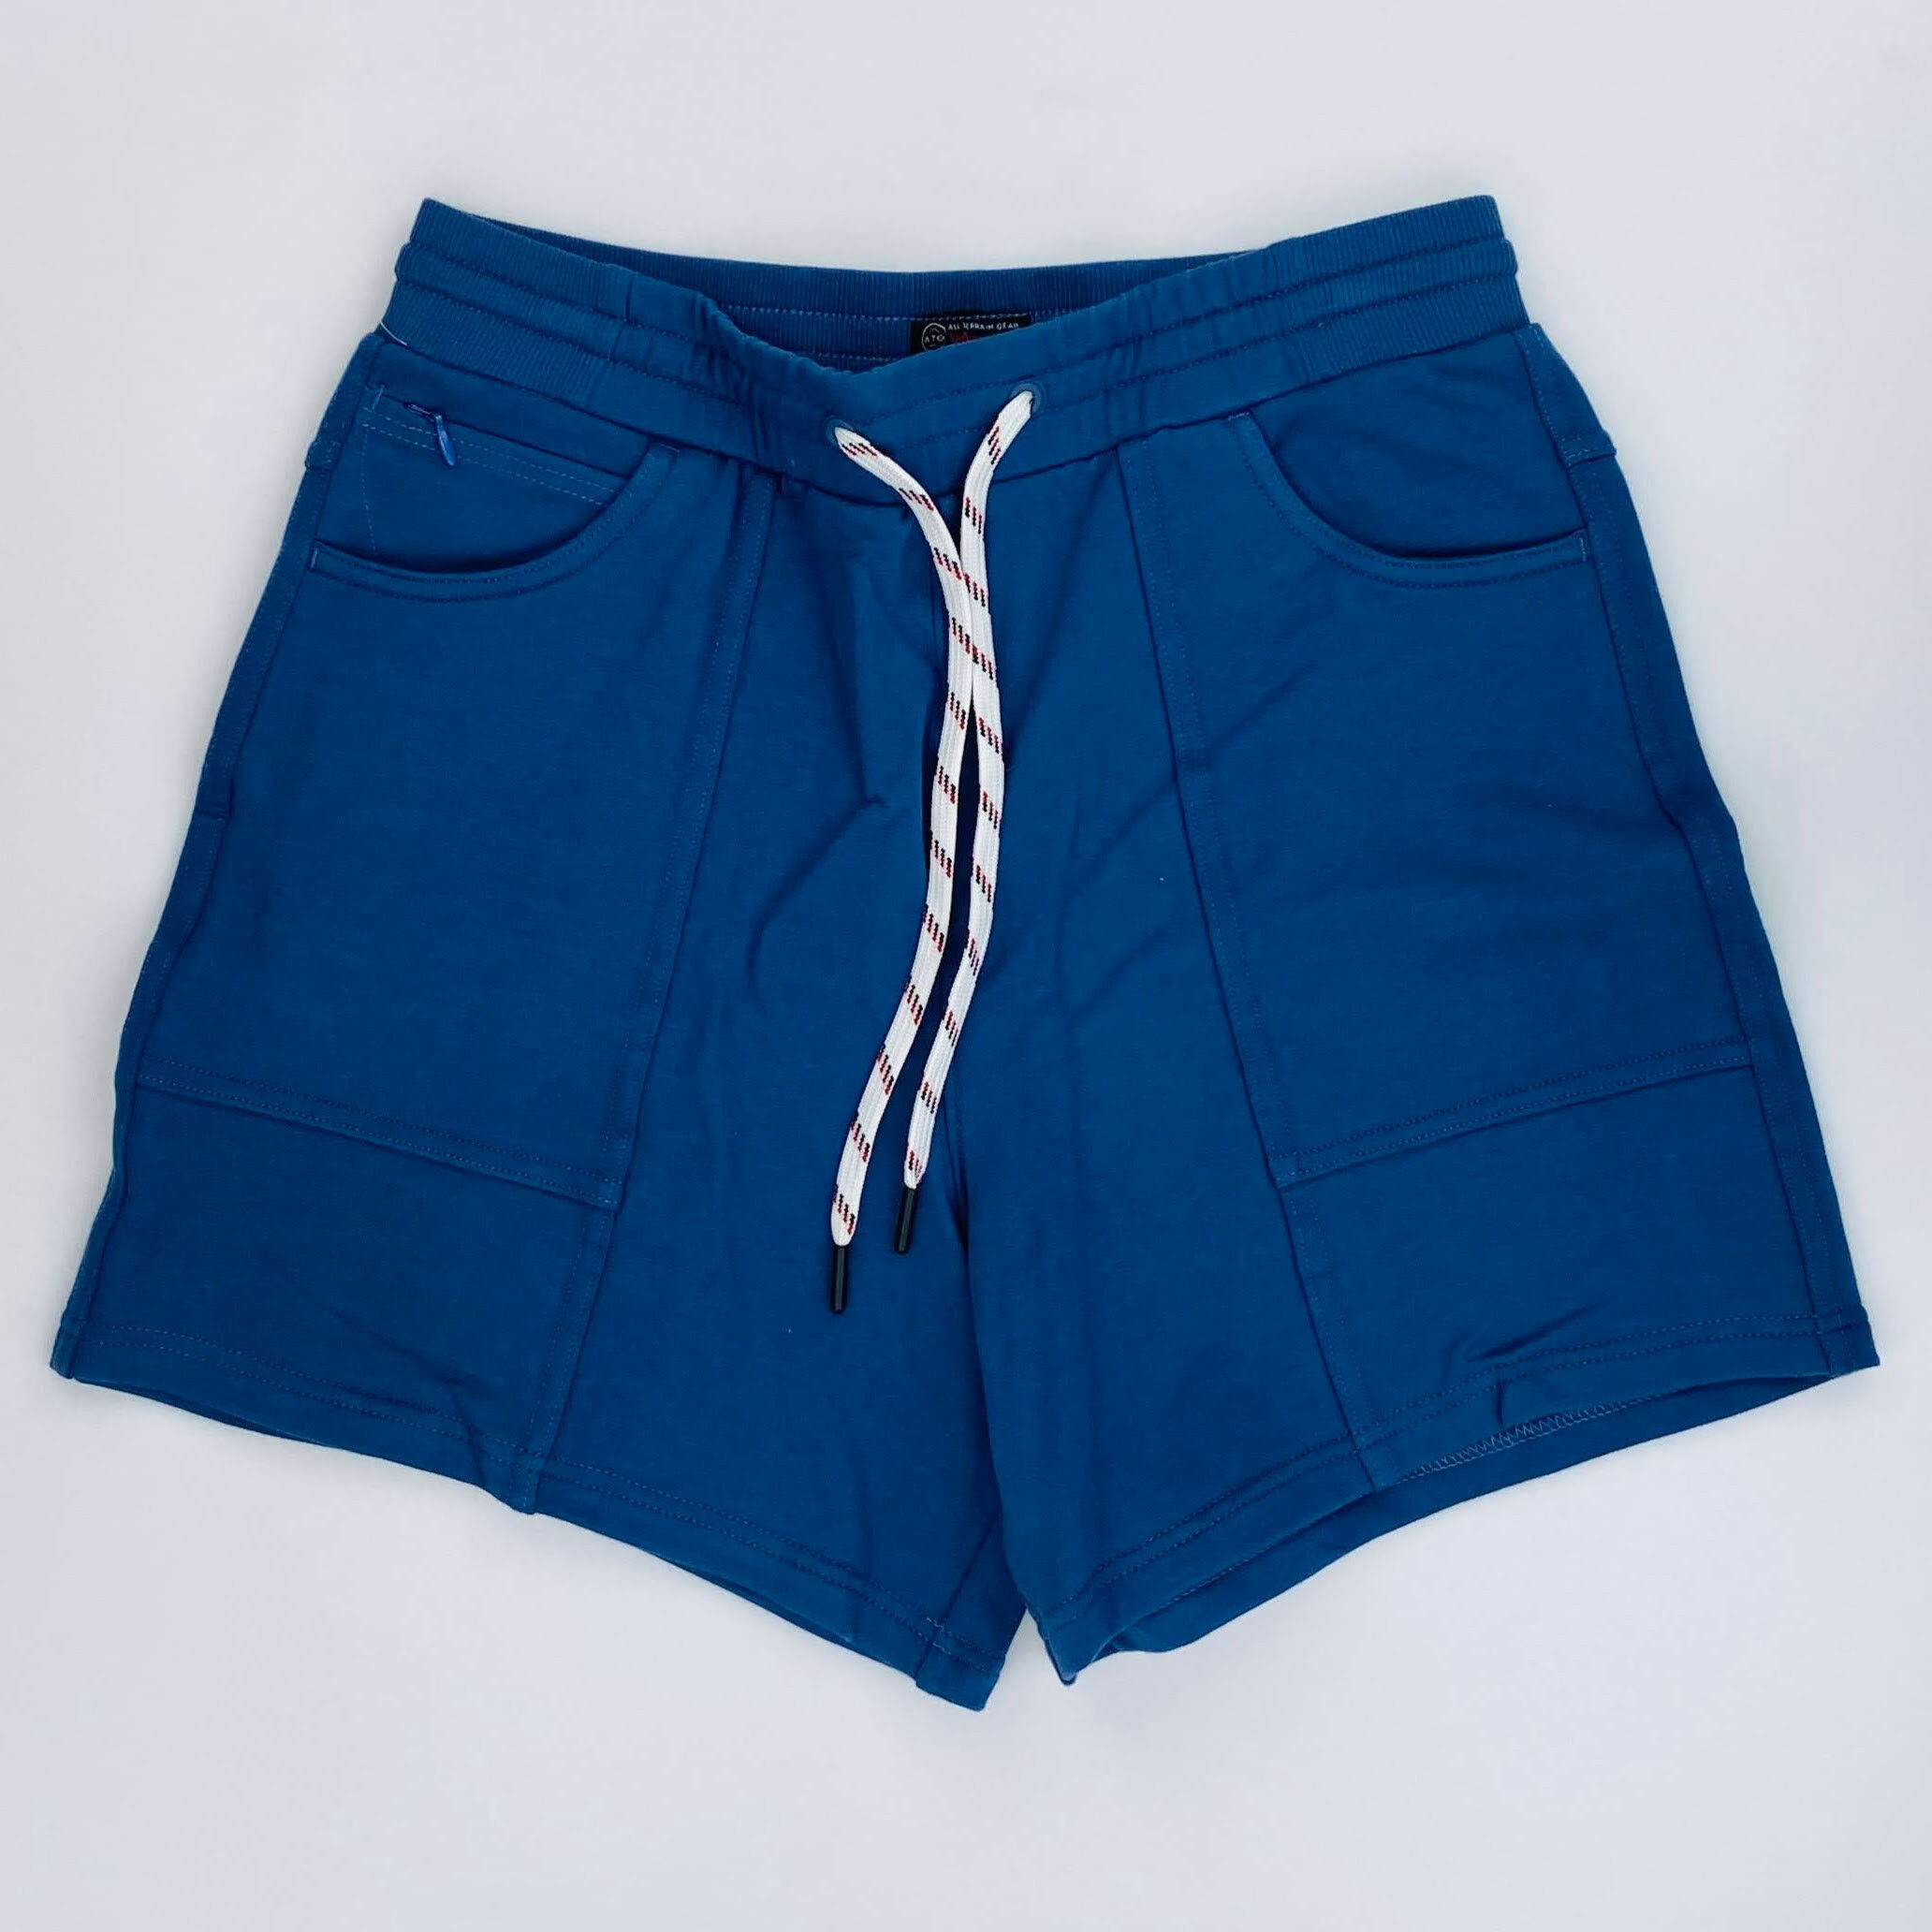 Wrangler Athleisure Short - Second Hand Walking trousers - Women's - Blue - US 28 | Hardloop